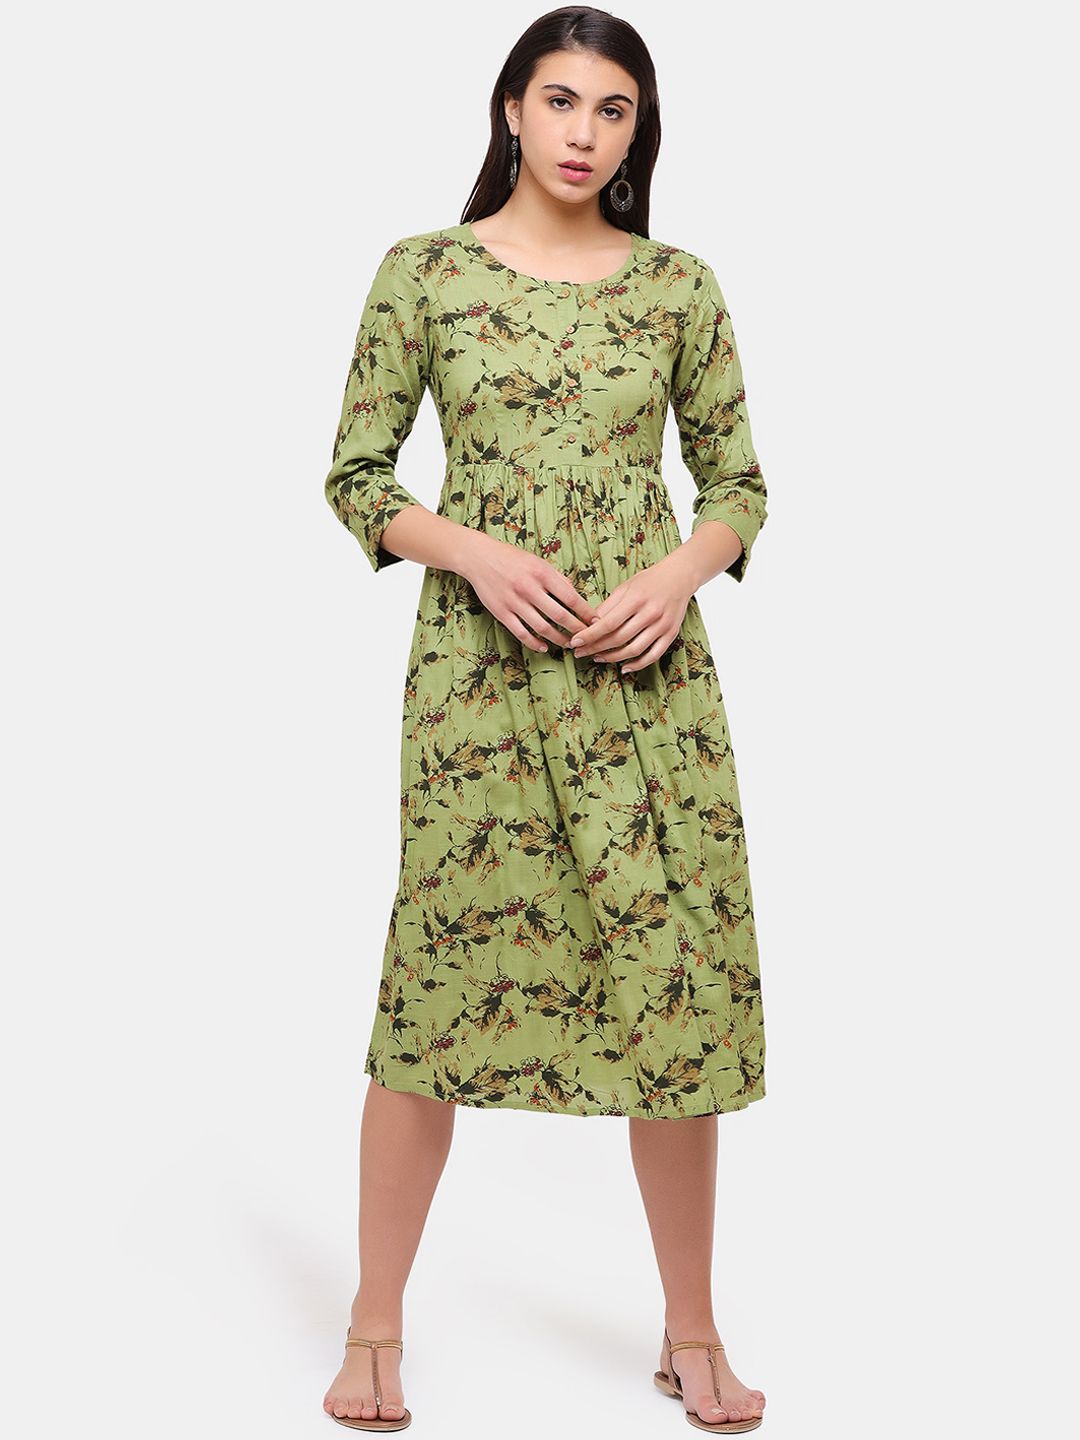 IMARA Green Floral Midi Dress Price in India